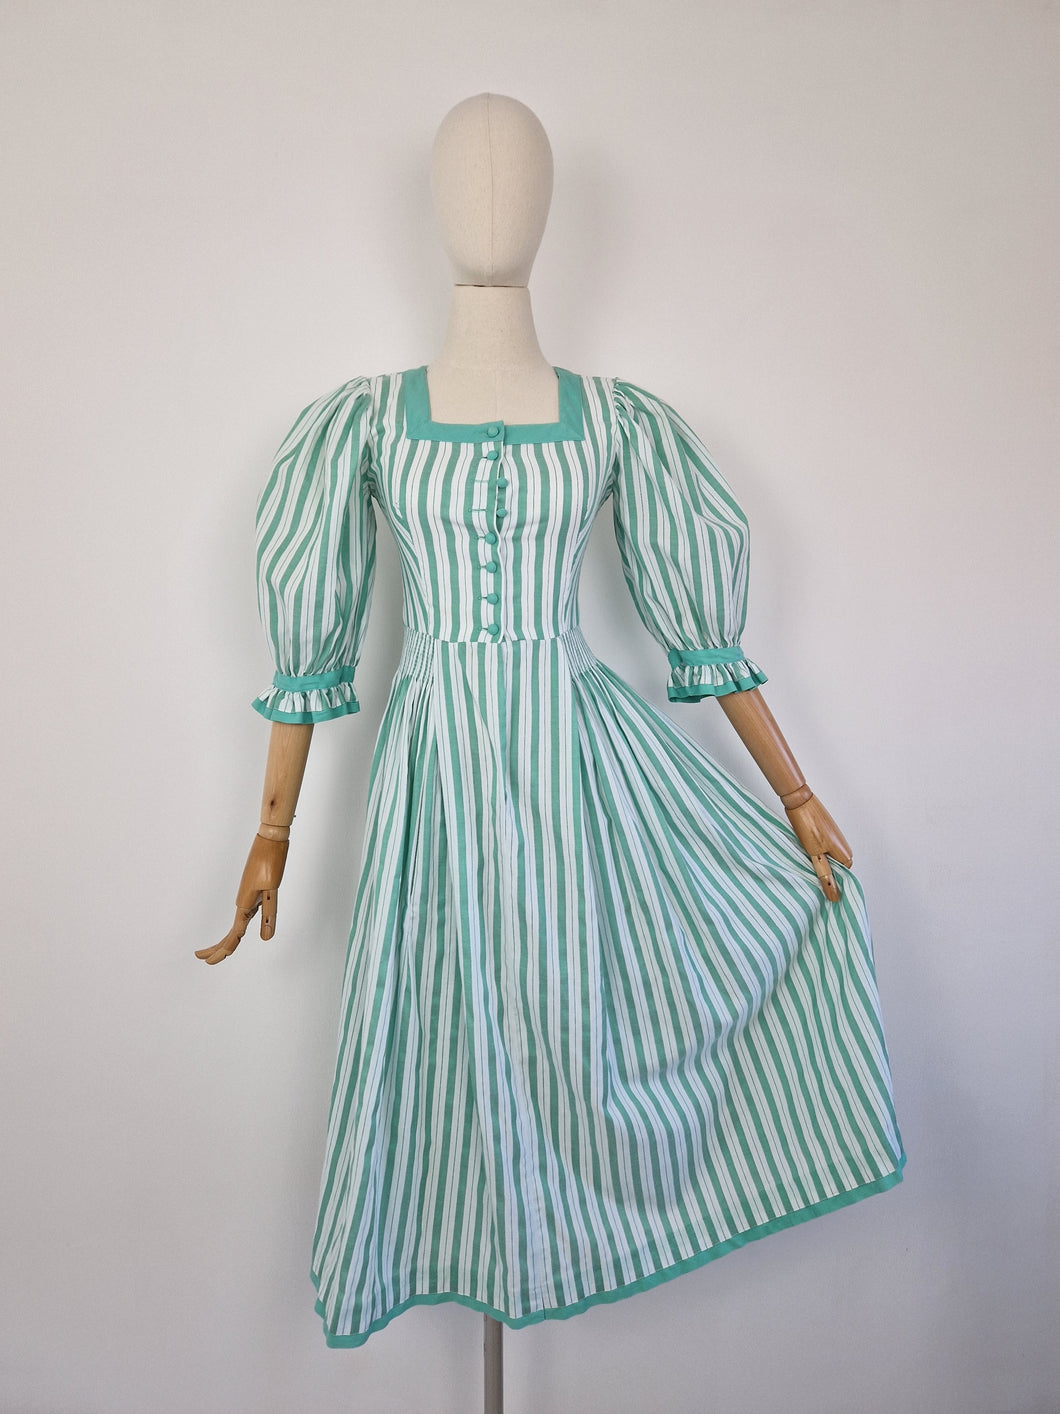 Vintage Austrian mint striped dress